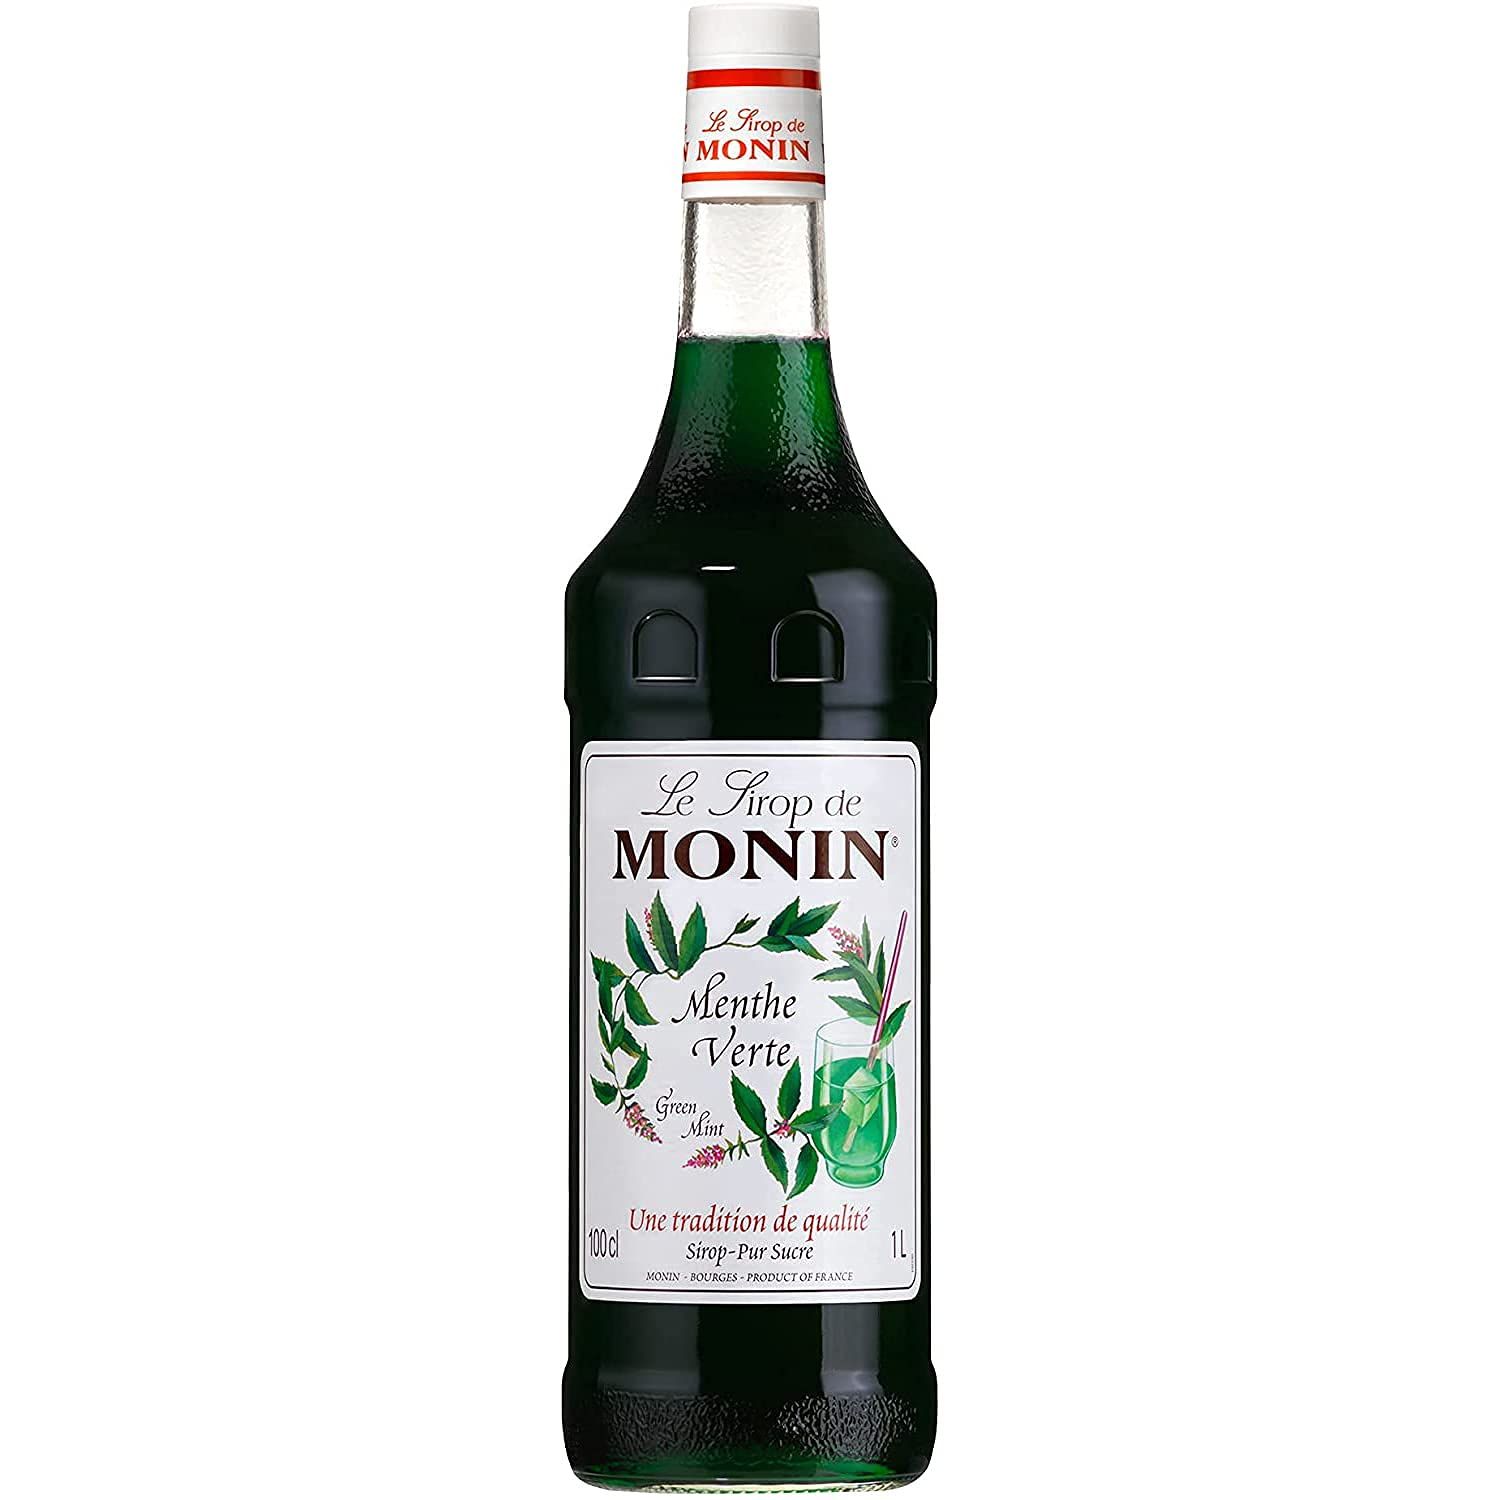  Monin Green Mint Syrup Image